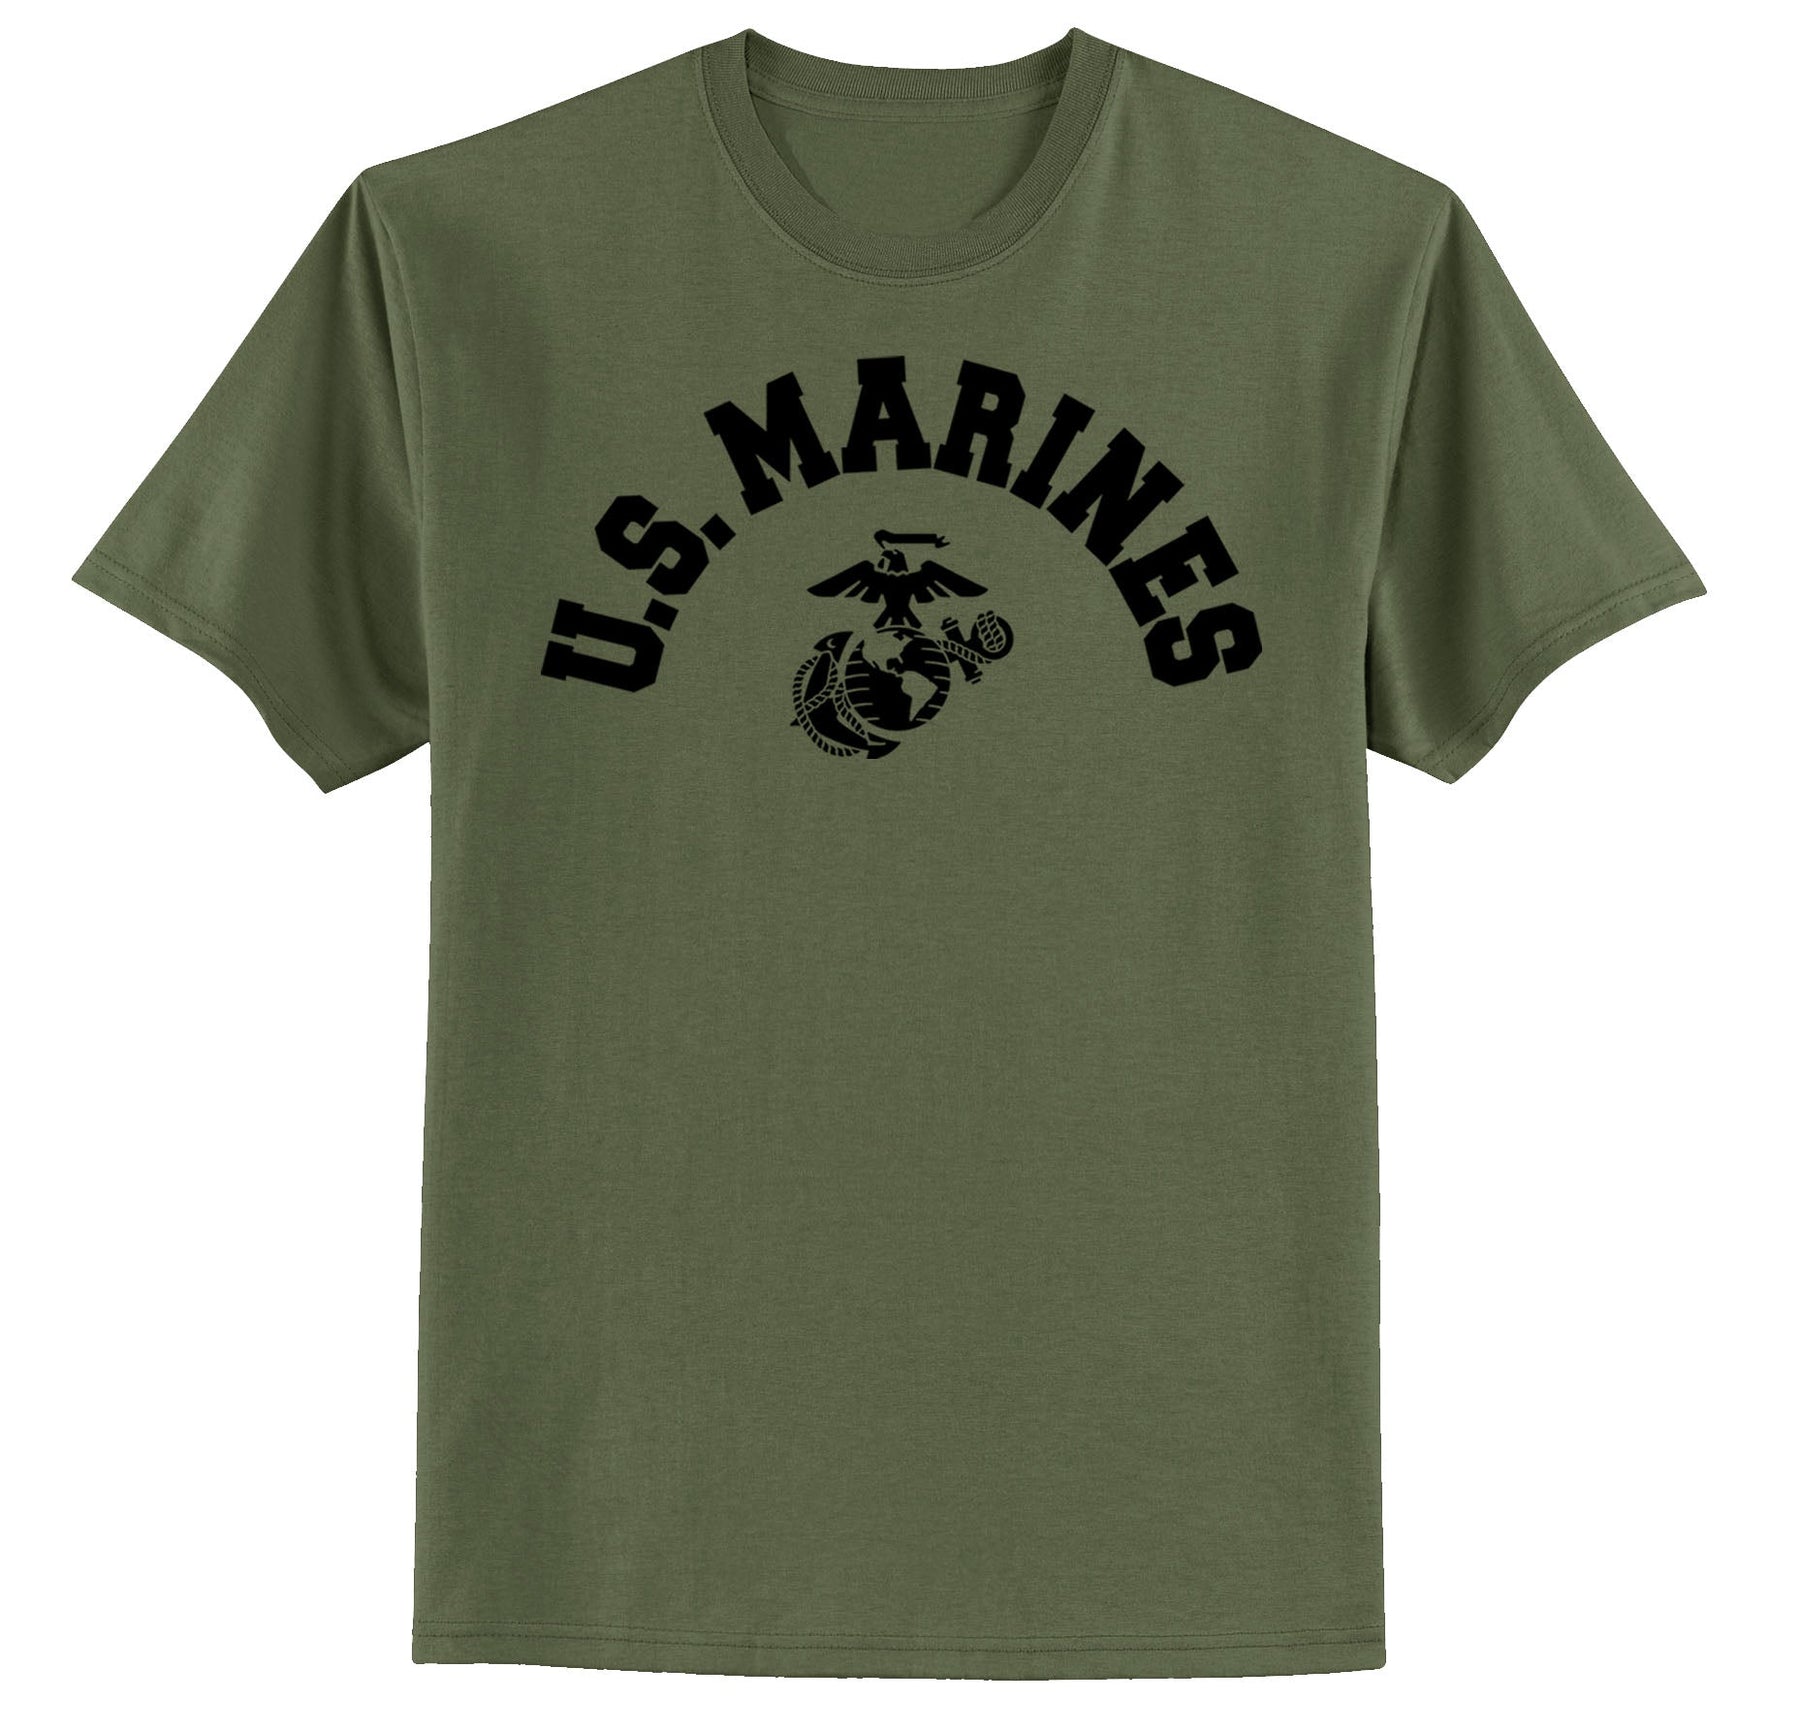 Closeout U.S. Marines Tee